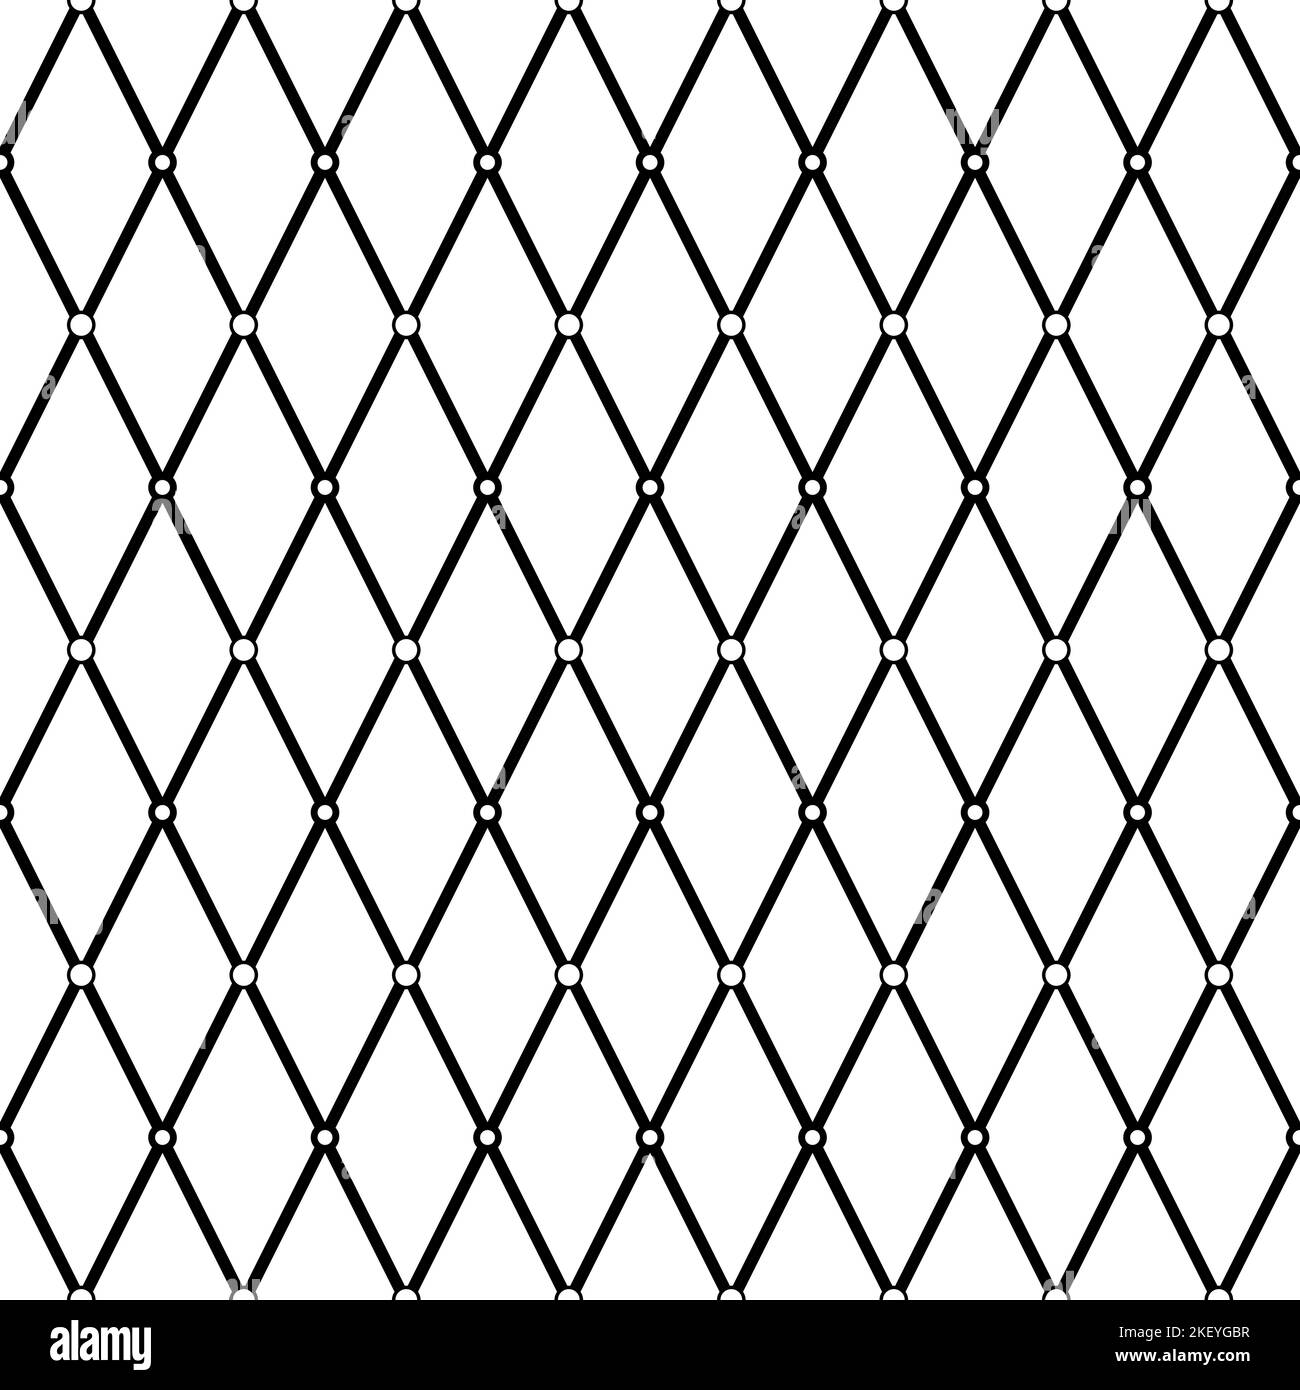 Rhombus seamless pattern. Simple vector geometric background. Stock Vector